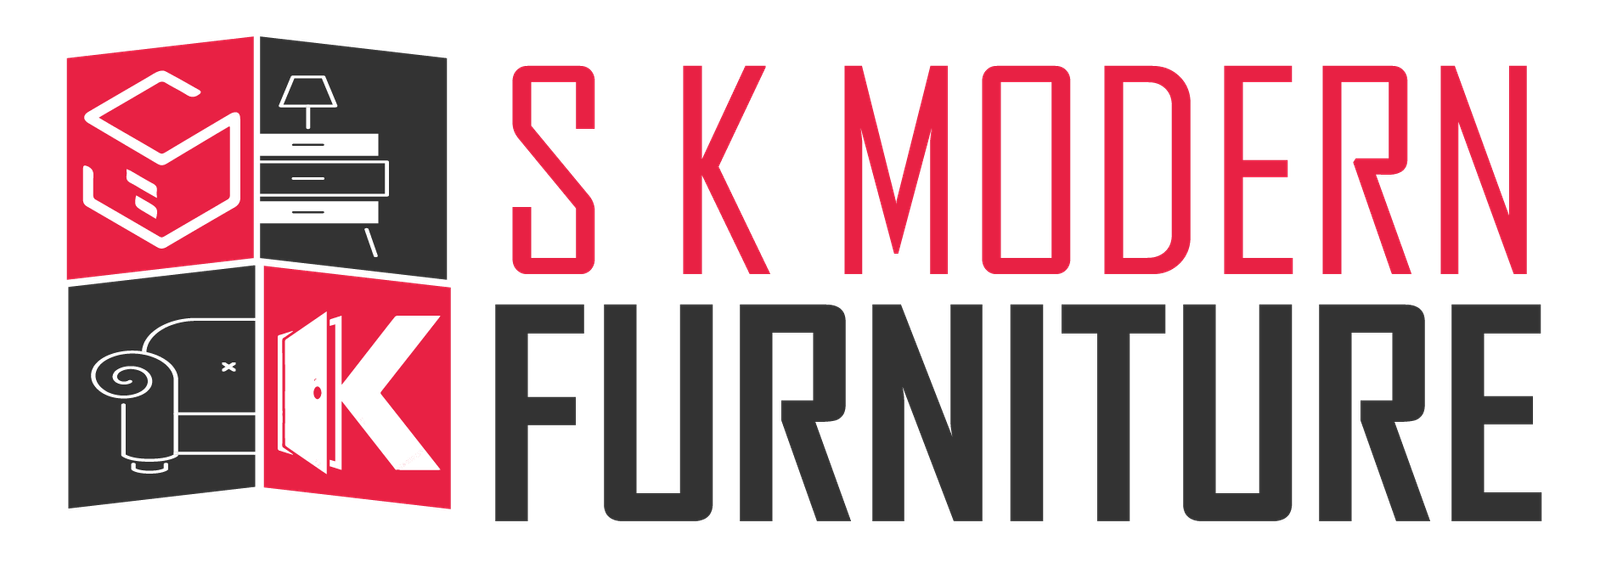 S K Modern Furniture